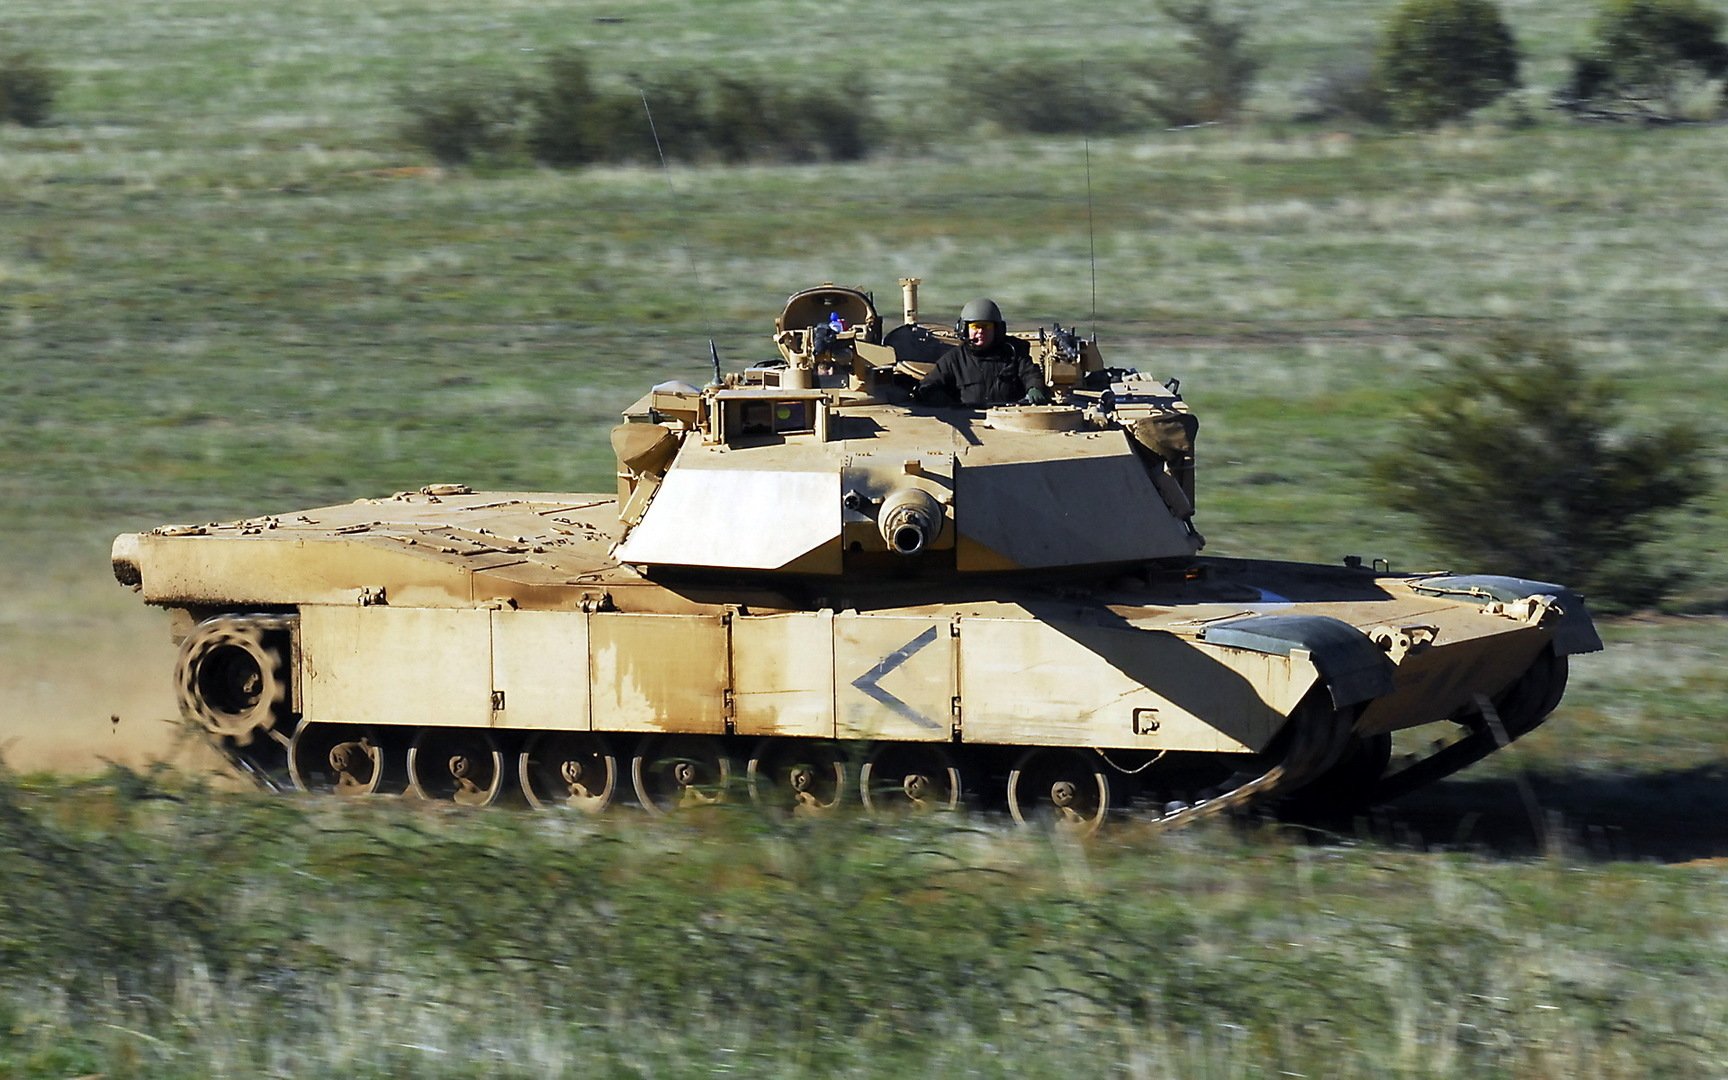 272 M1 Abrams Images, Stock Photos & Vectors | Shutterstock